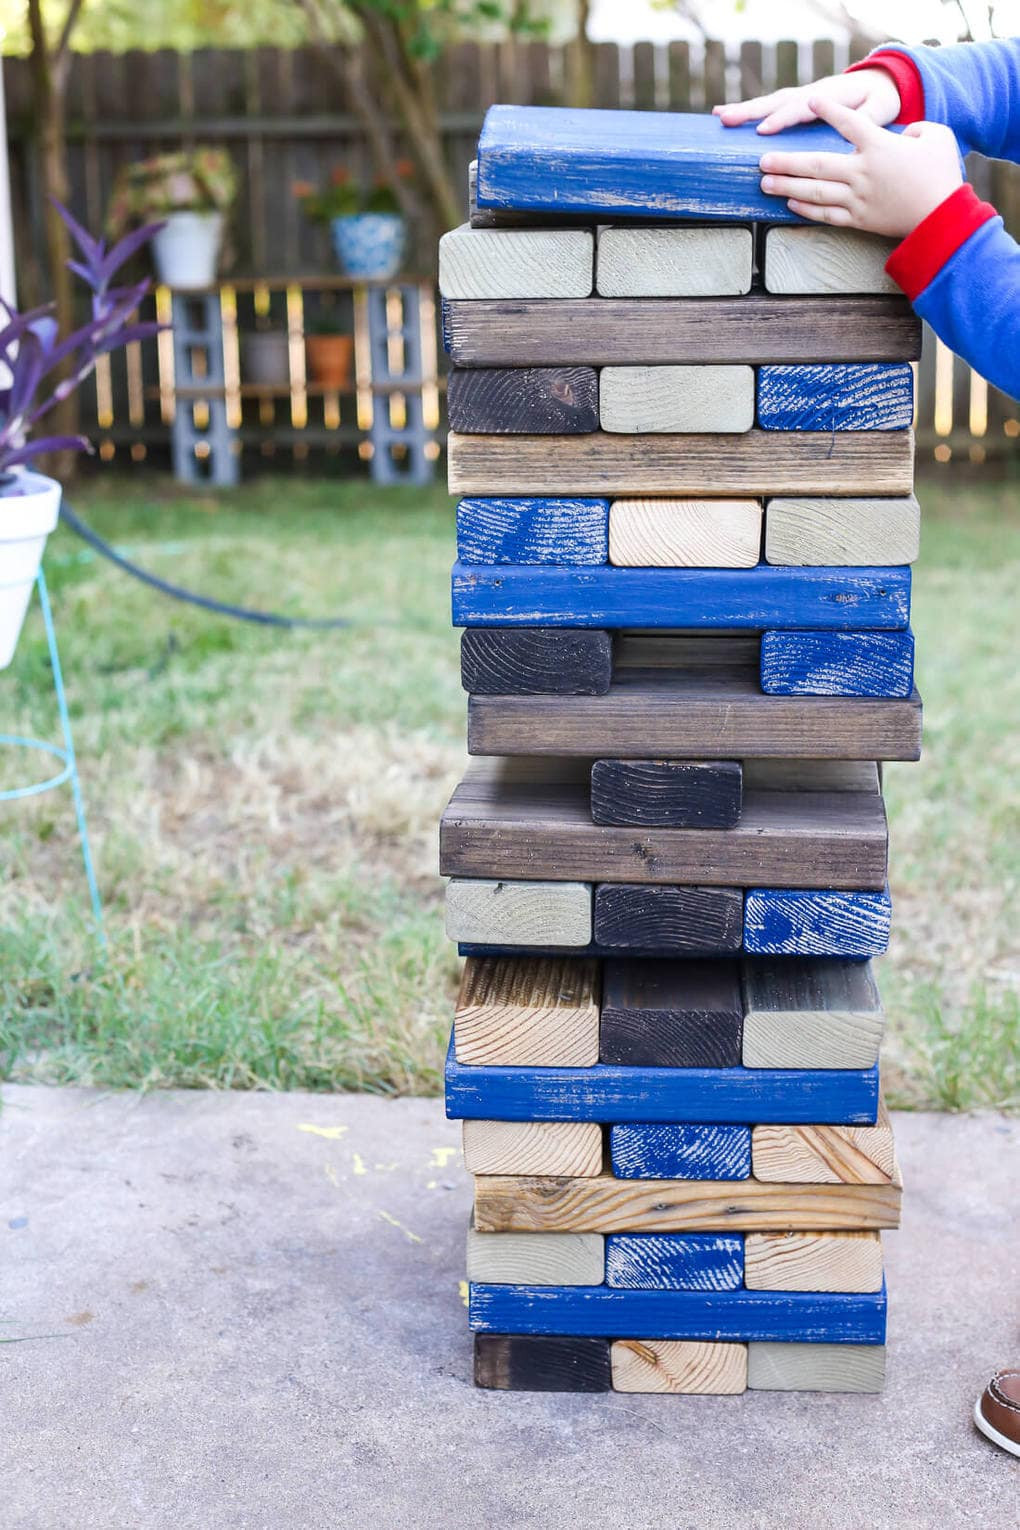 Best ideas about DIY Backyard Jenga
. Save or Pin DIY Lawn Games Backyard Blocks Now.